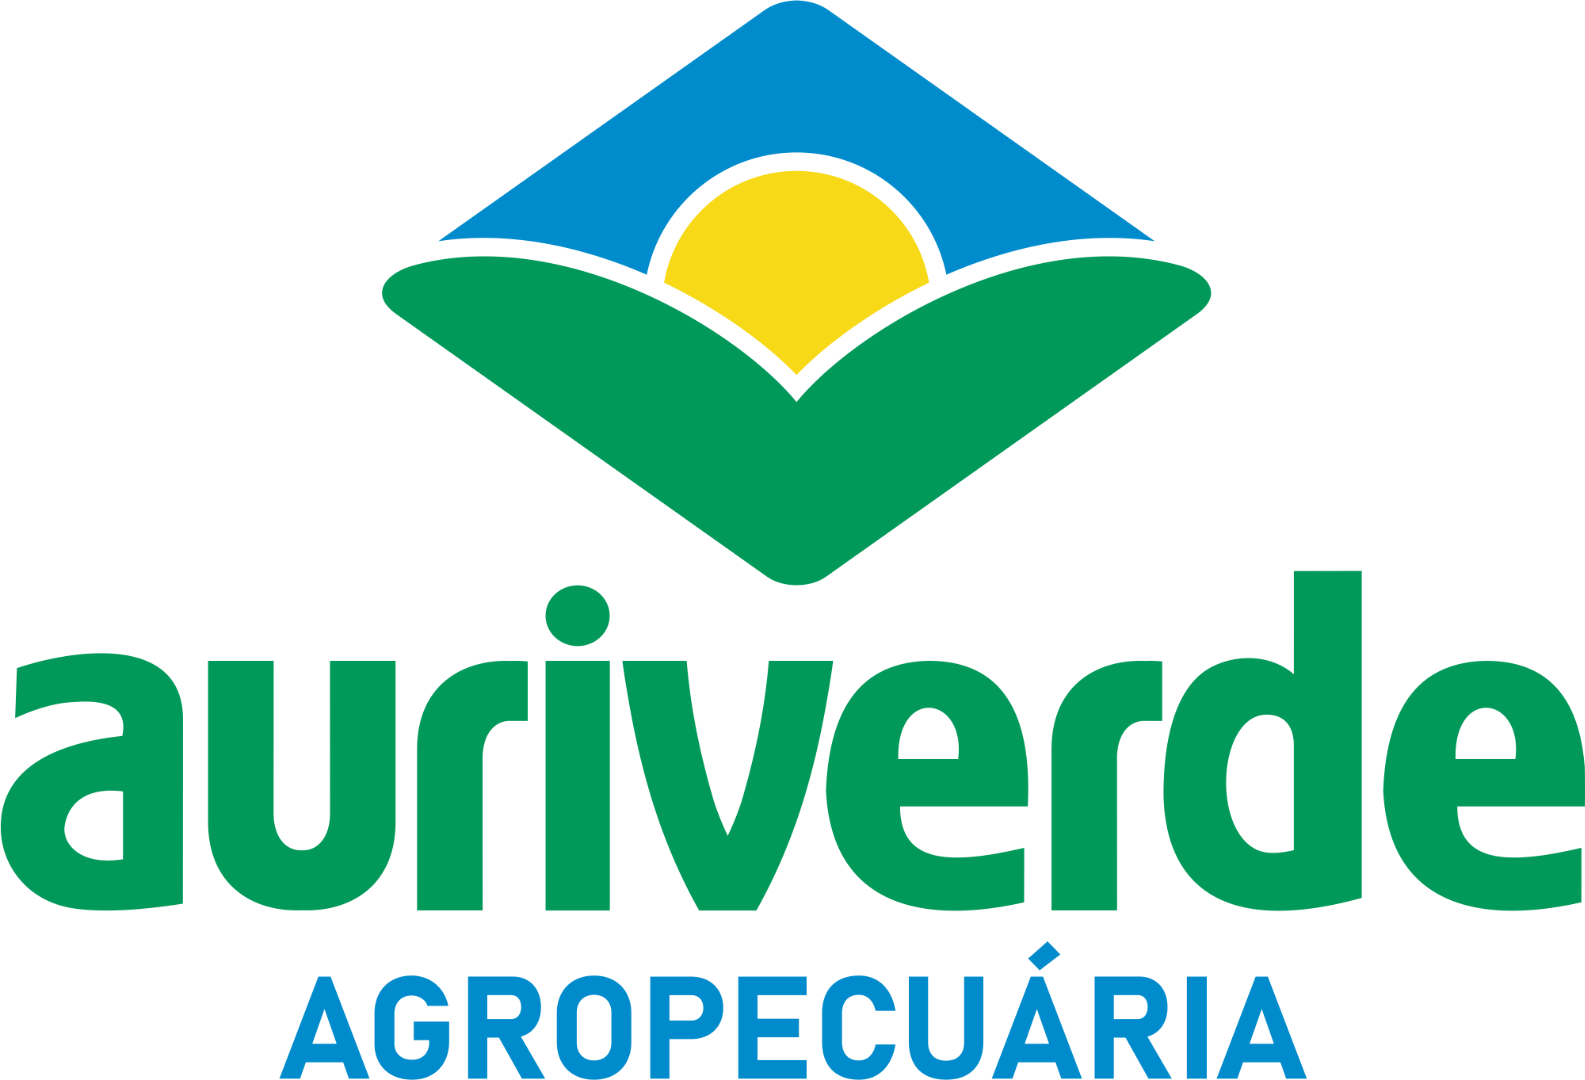 Marca Agropecuária Auriverde